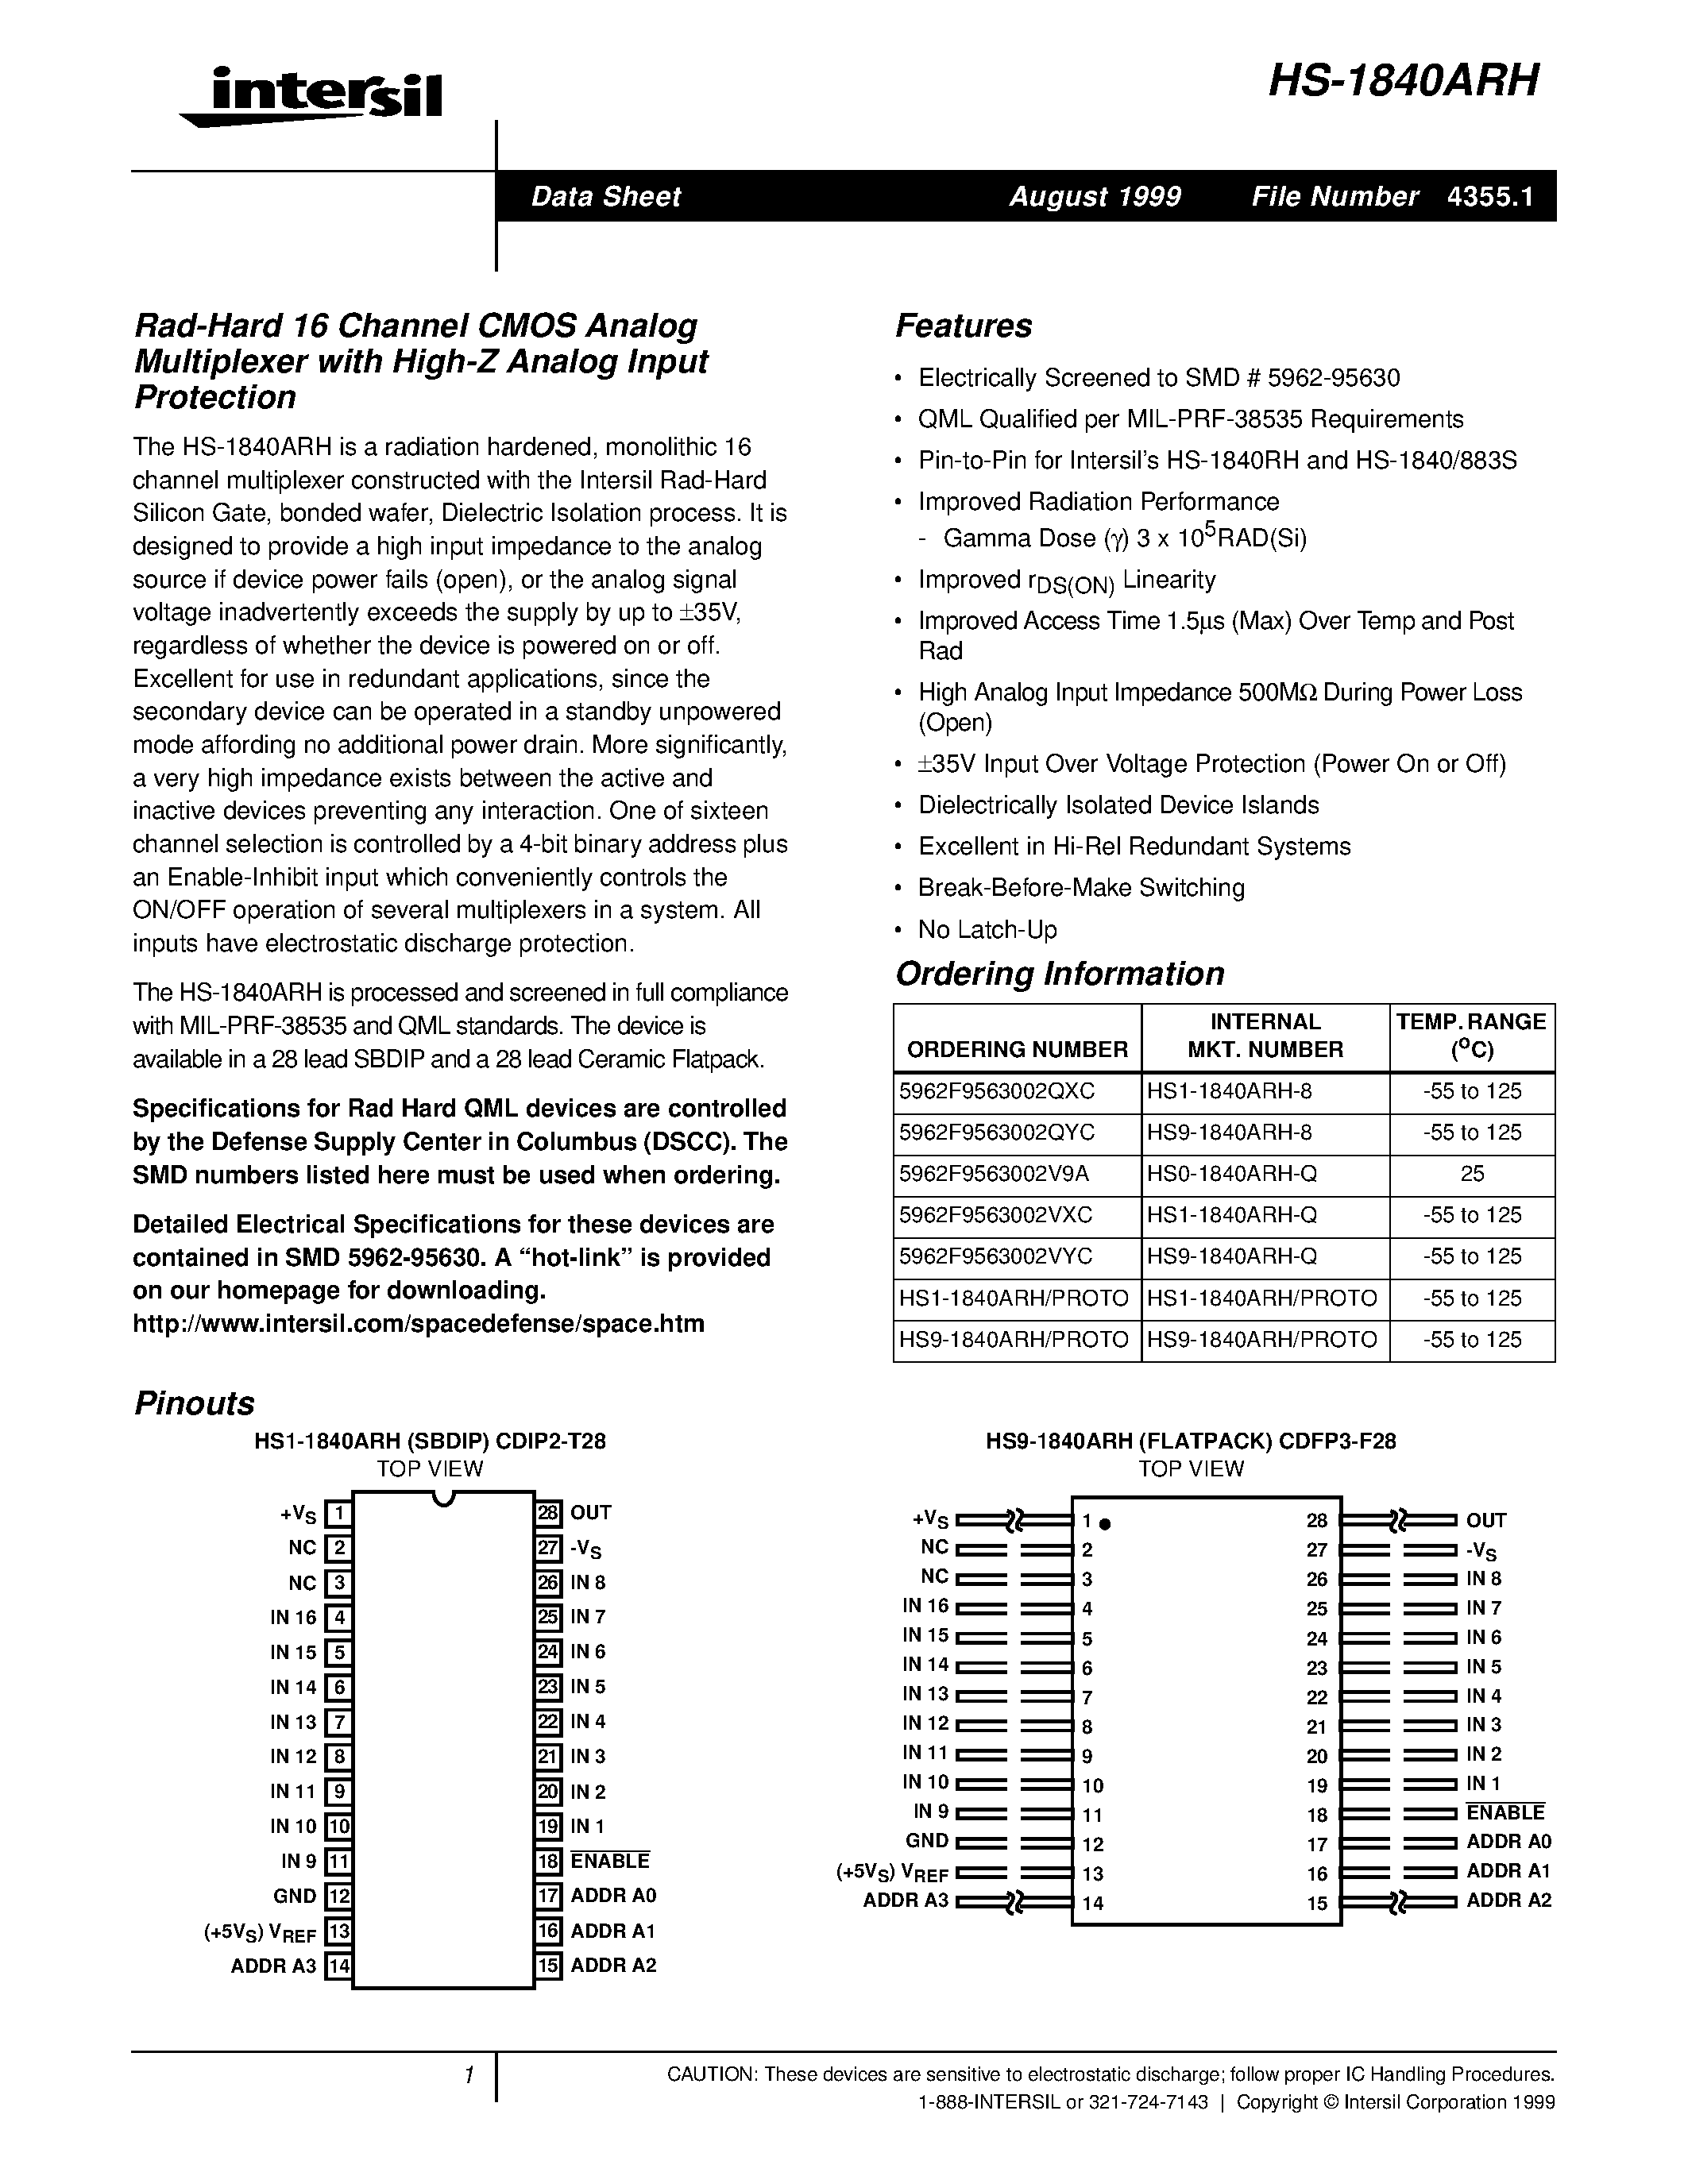 Даташит HS1-1840ARH-8 - Rad-Hard 16 Channel CMOS Analog Multiplexer with High-Z Analog Input Protection страница 1